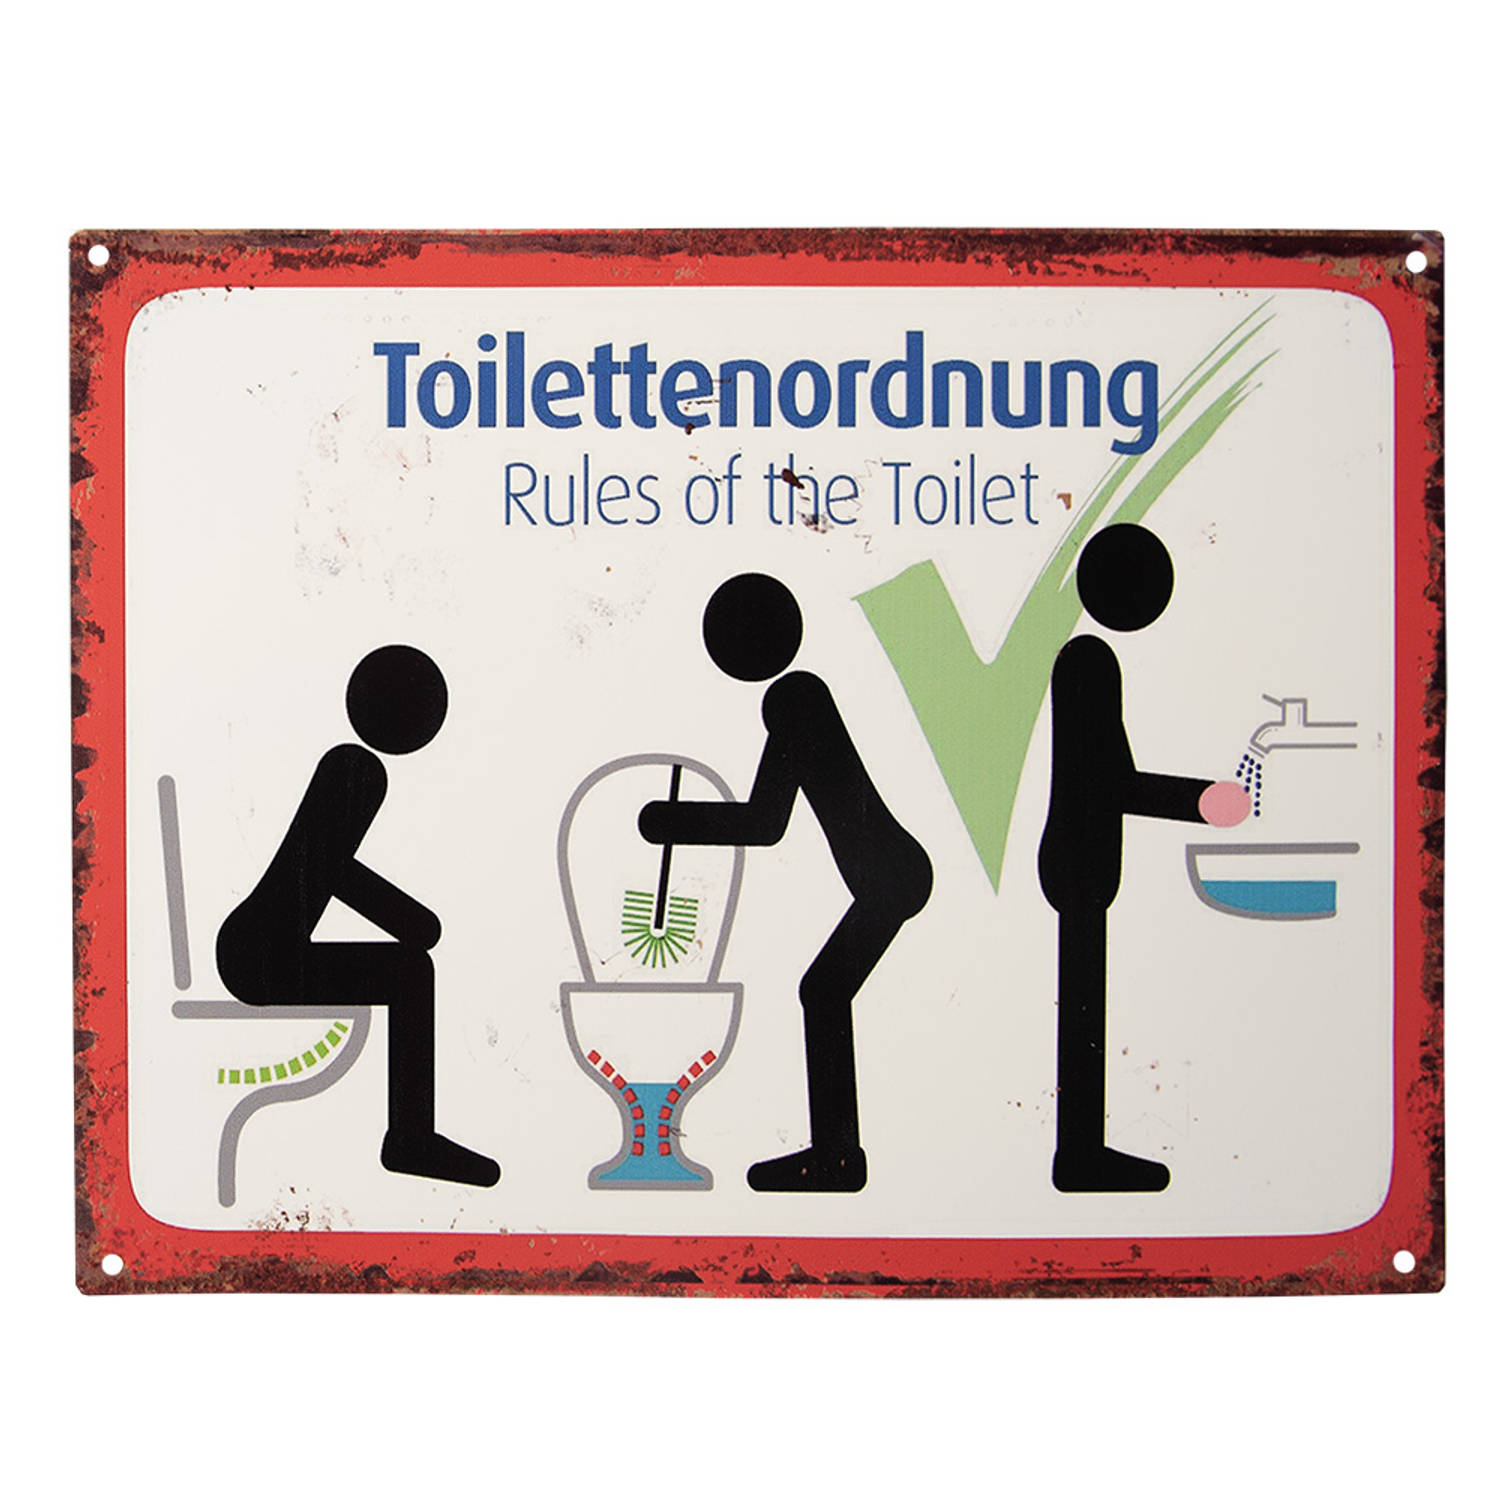 Clayre & Eef Tekstbord 33x25 Cm Wit Rood Ijzer Toilettenordnung Rules Of The Toilet Wandbord Spreuk 